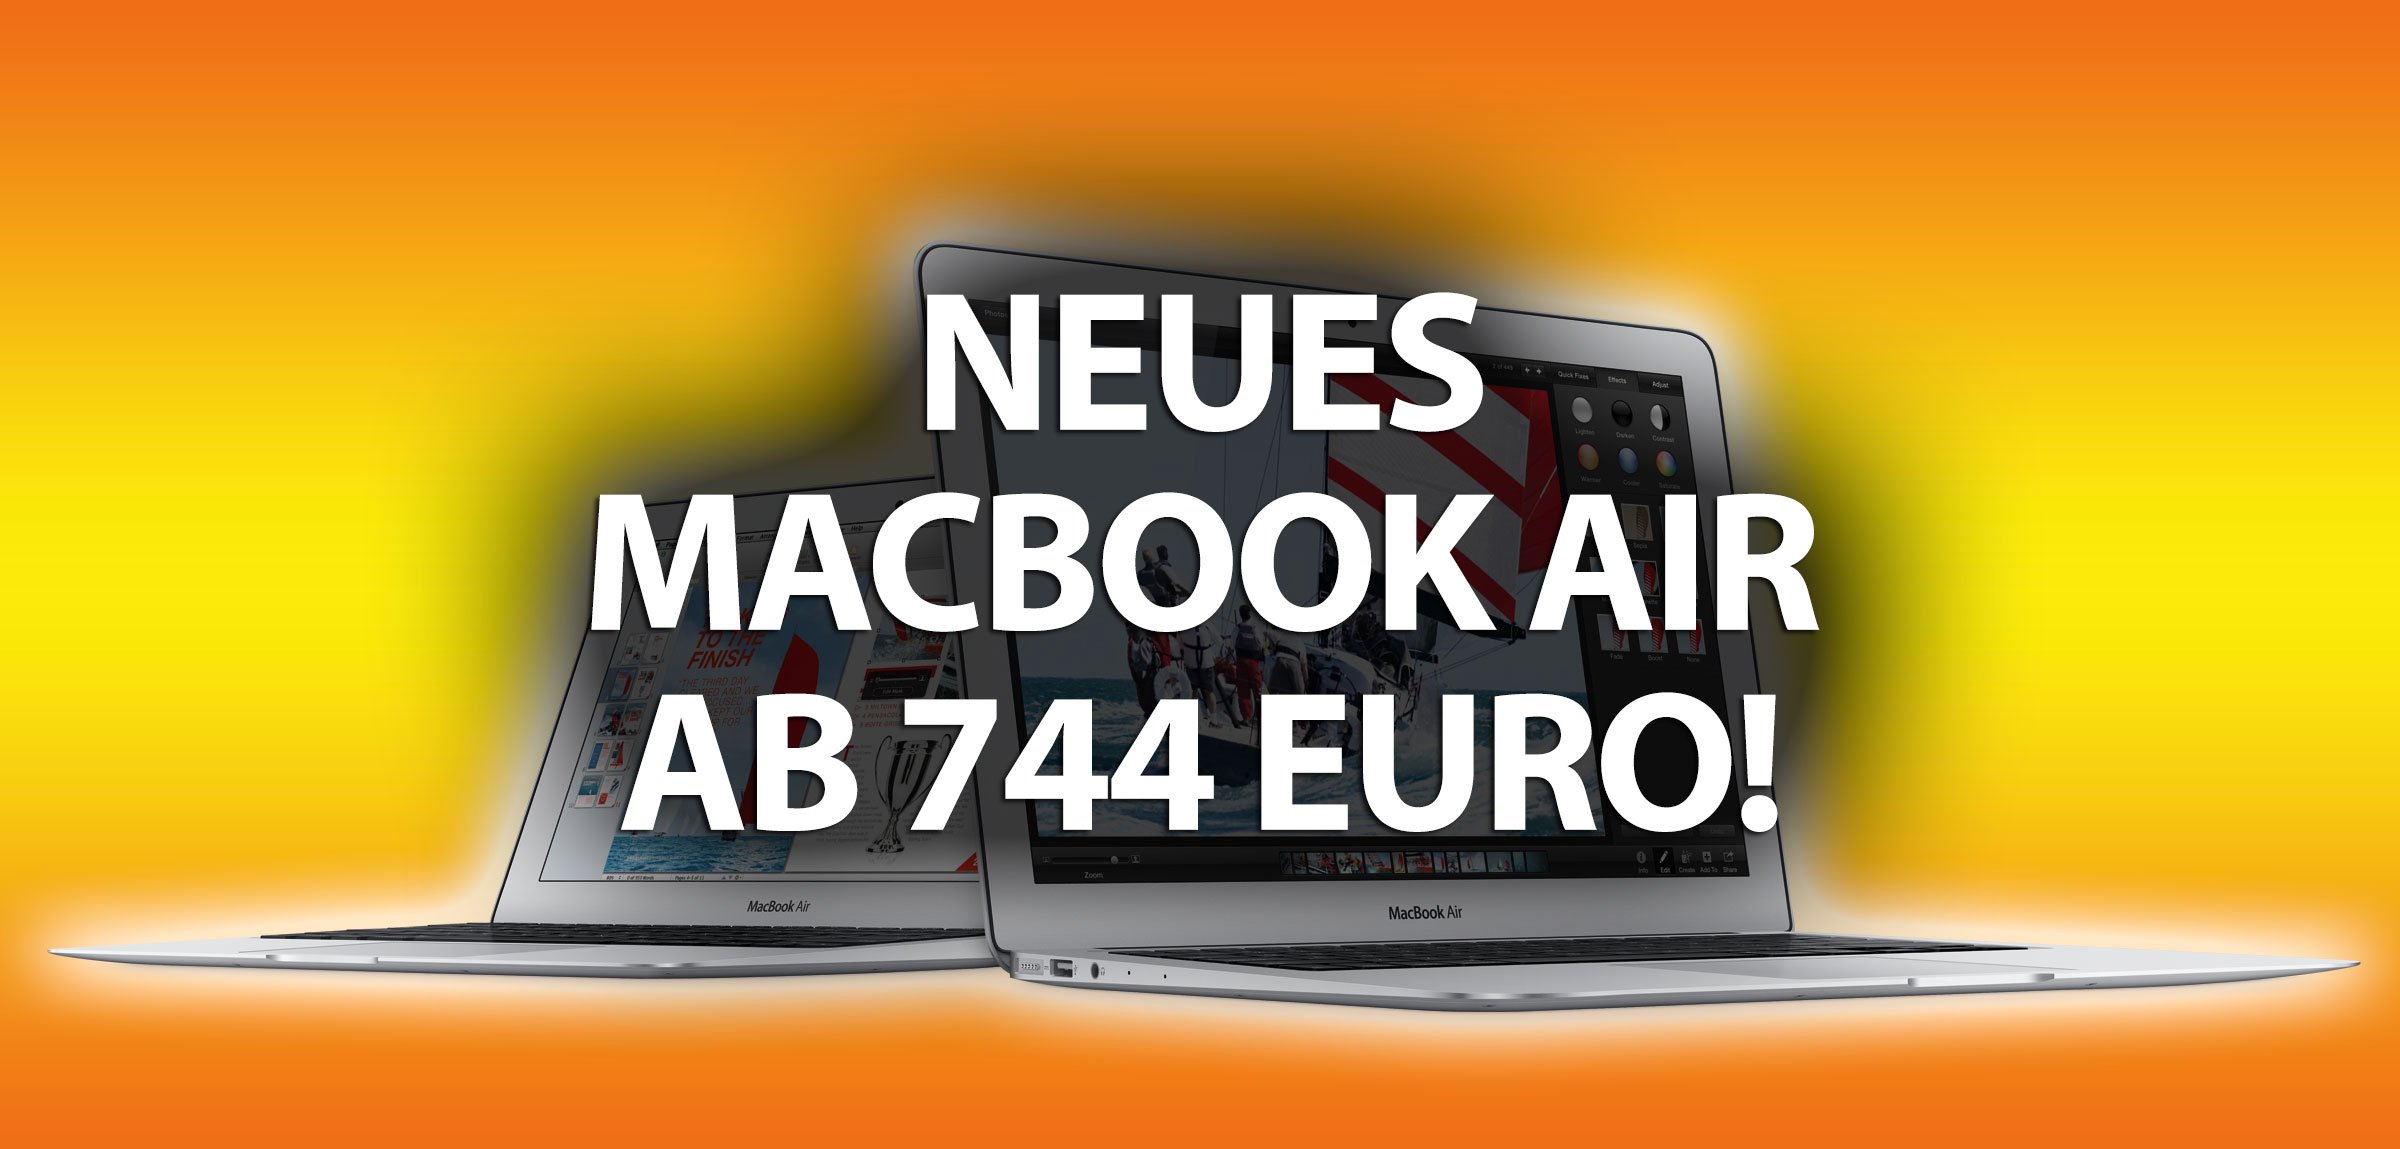 Neuer Rabattcode für Macbook Air 2014: Bester Preis! (Update: Studenten-Rabatt) 2